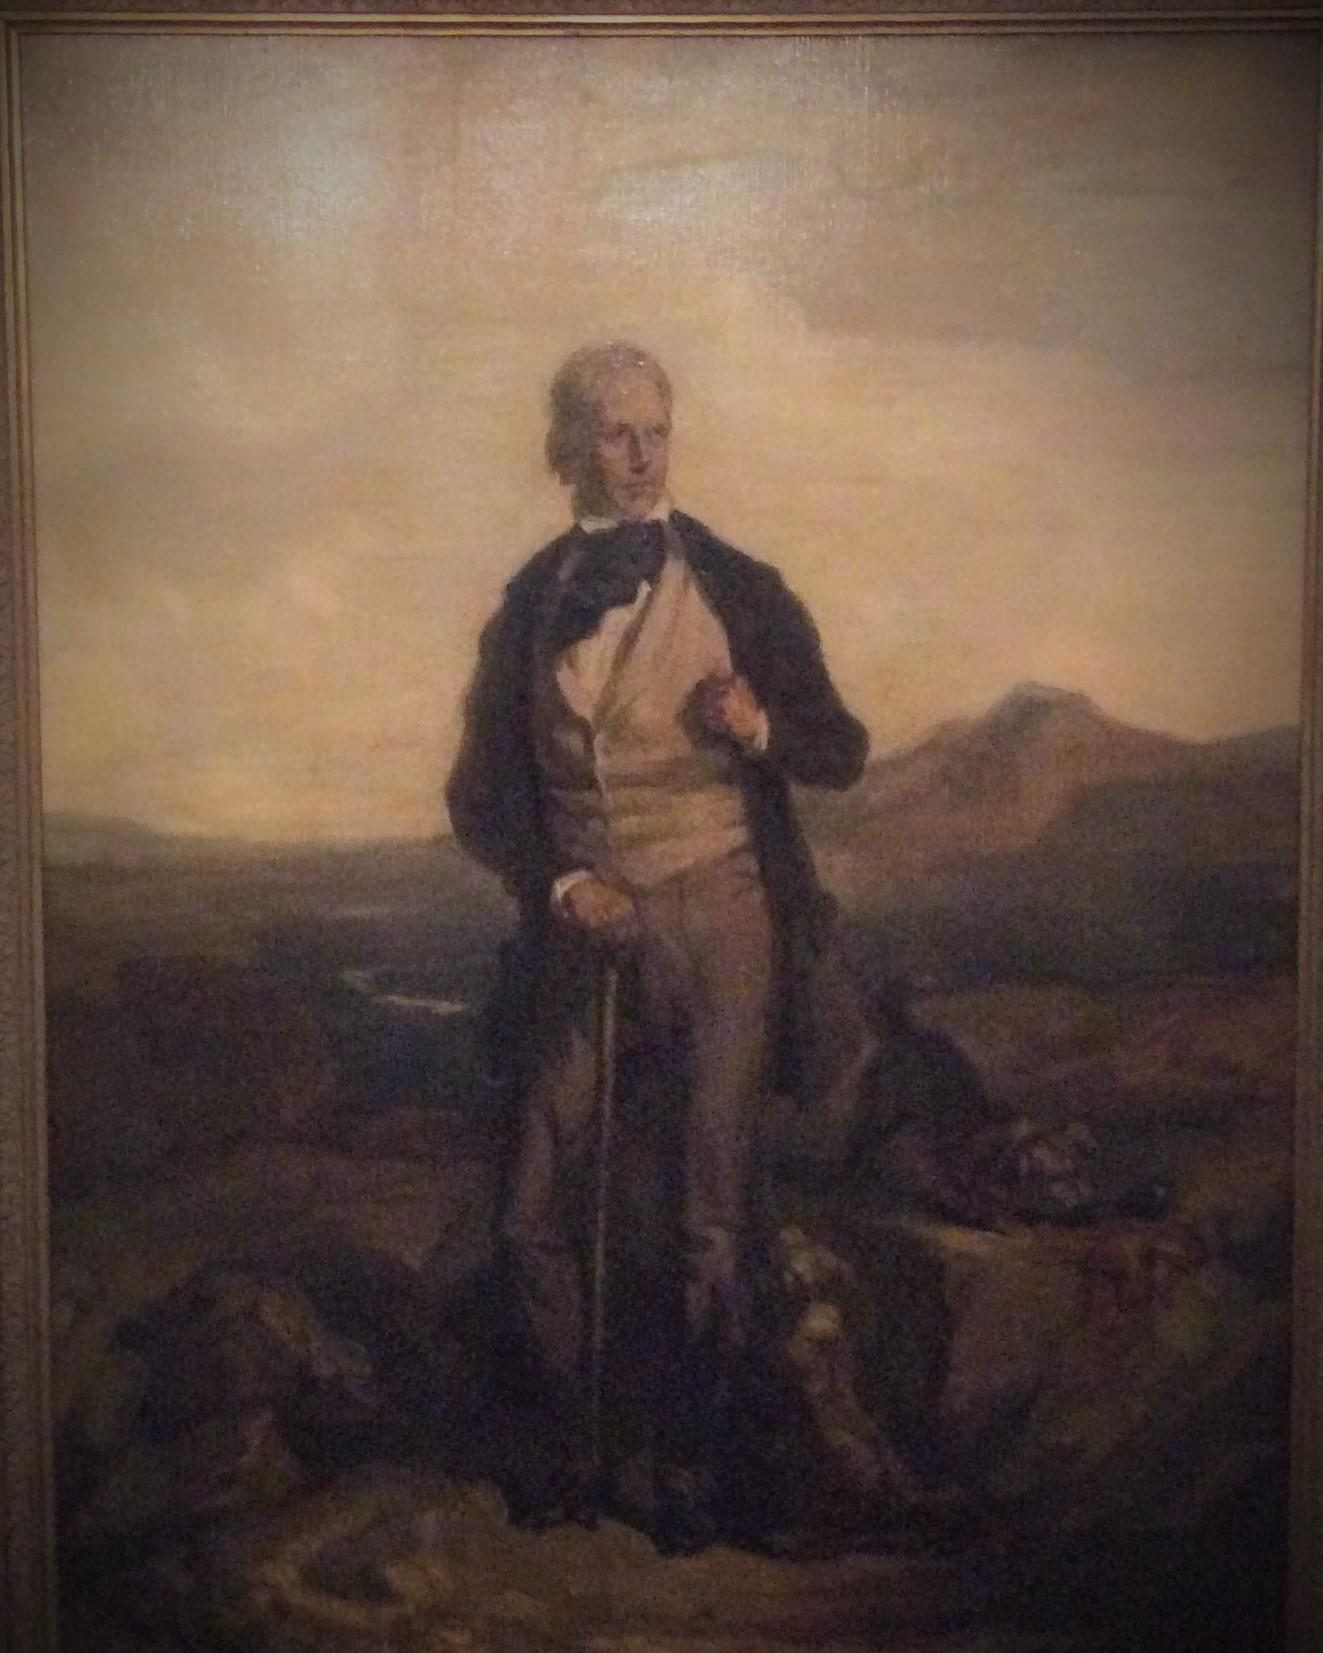 Portrait of Sir Walter Scott - 19th Century Oil, portrait painting, old master - Black Portrait Painting by Unknown